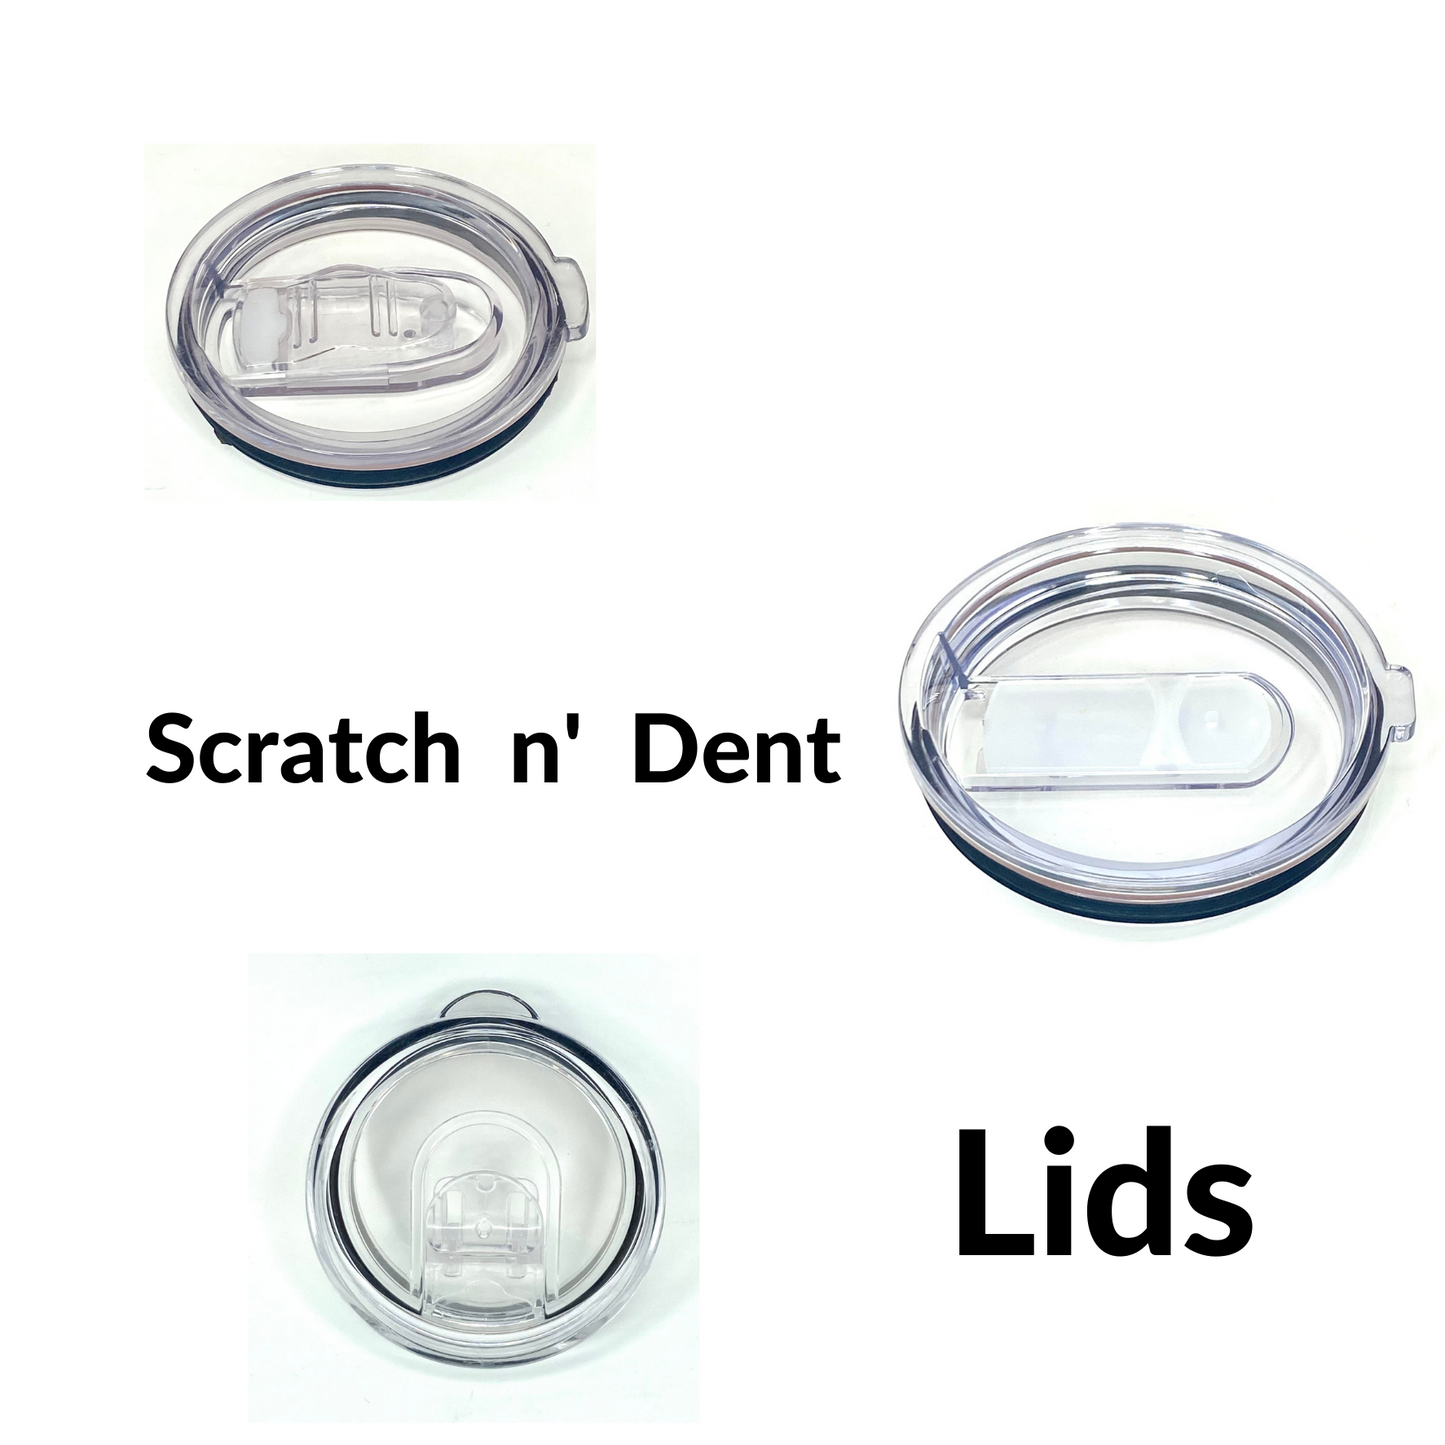 Scratch and Dent Lids